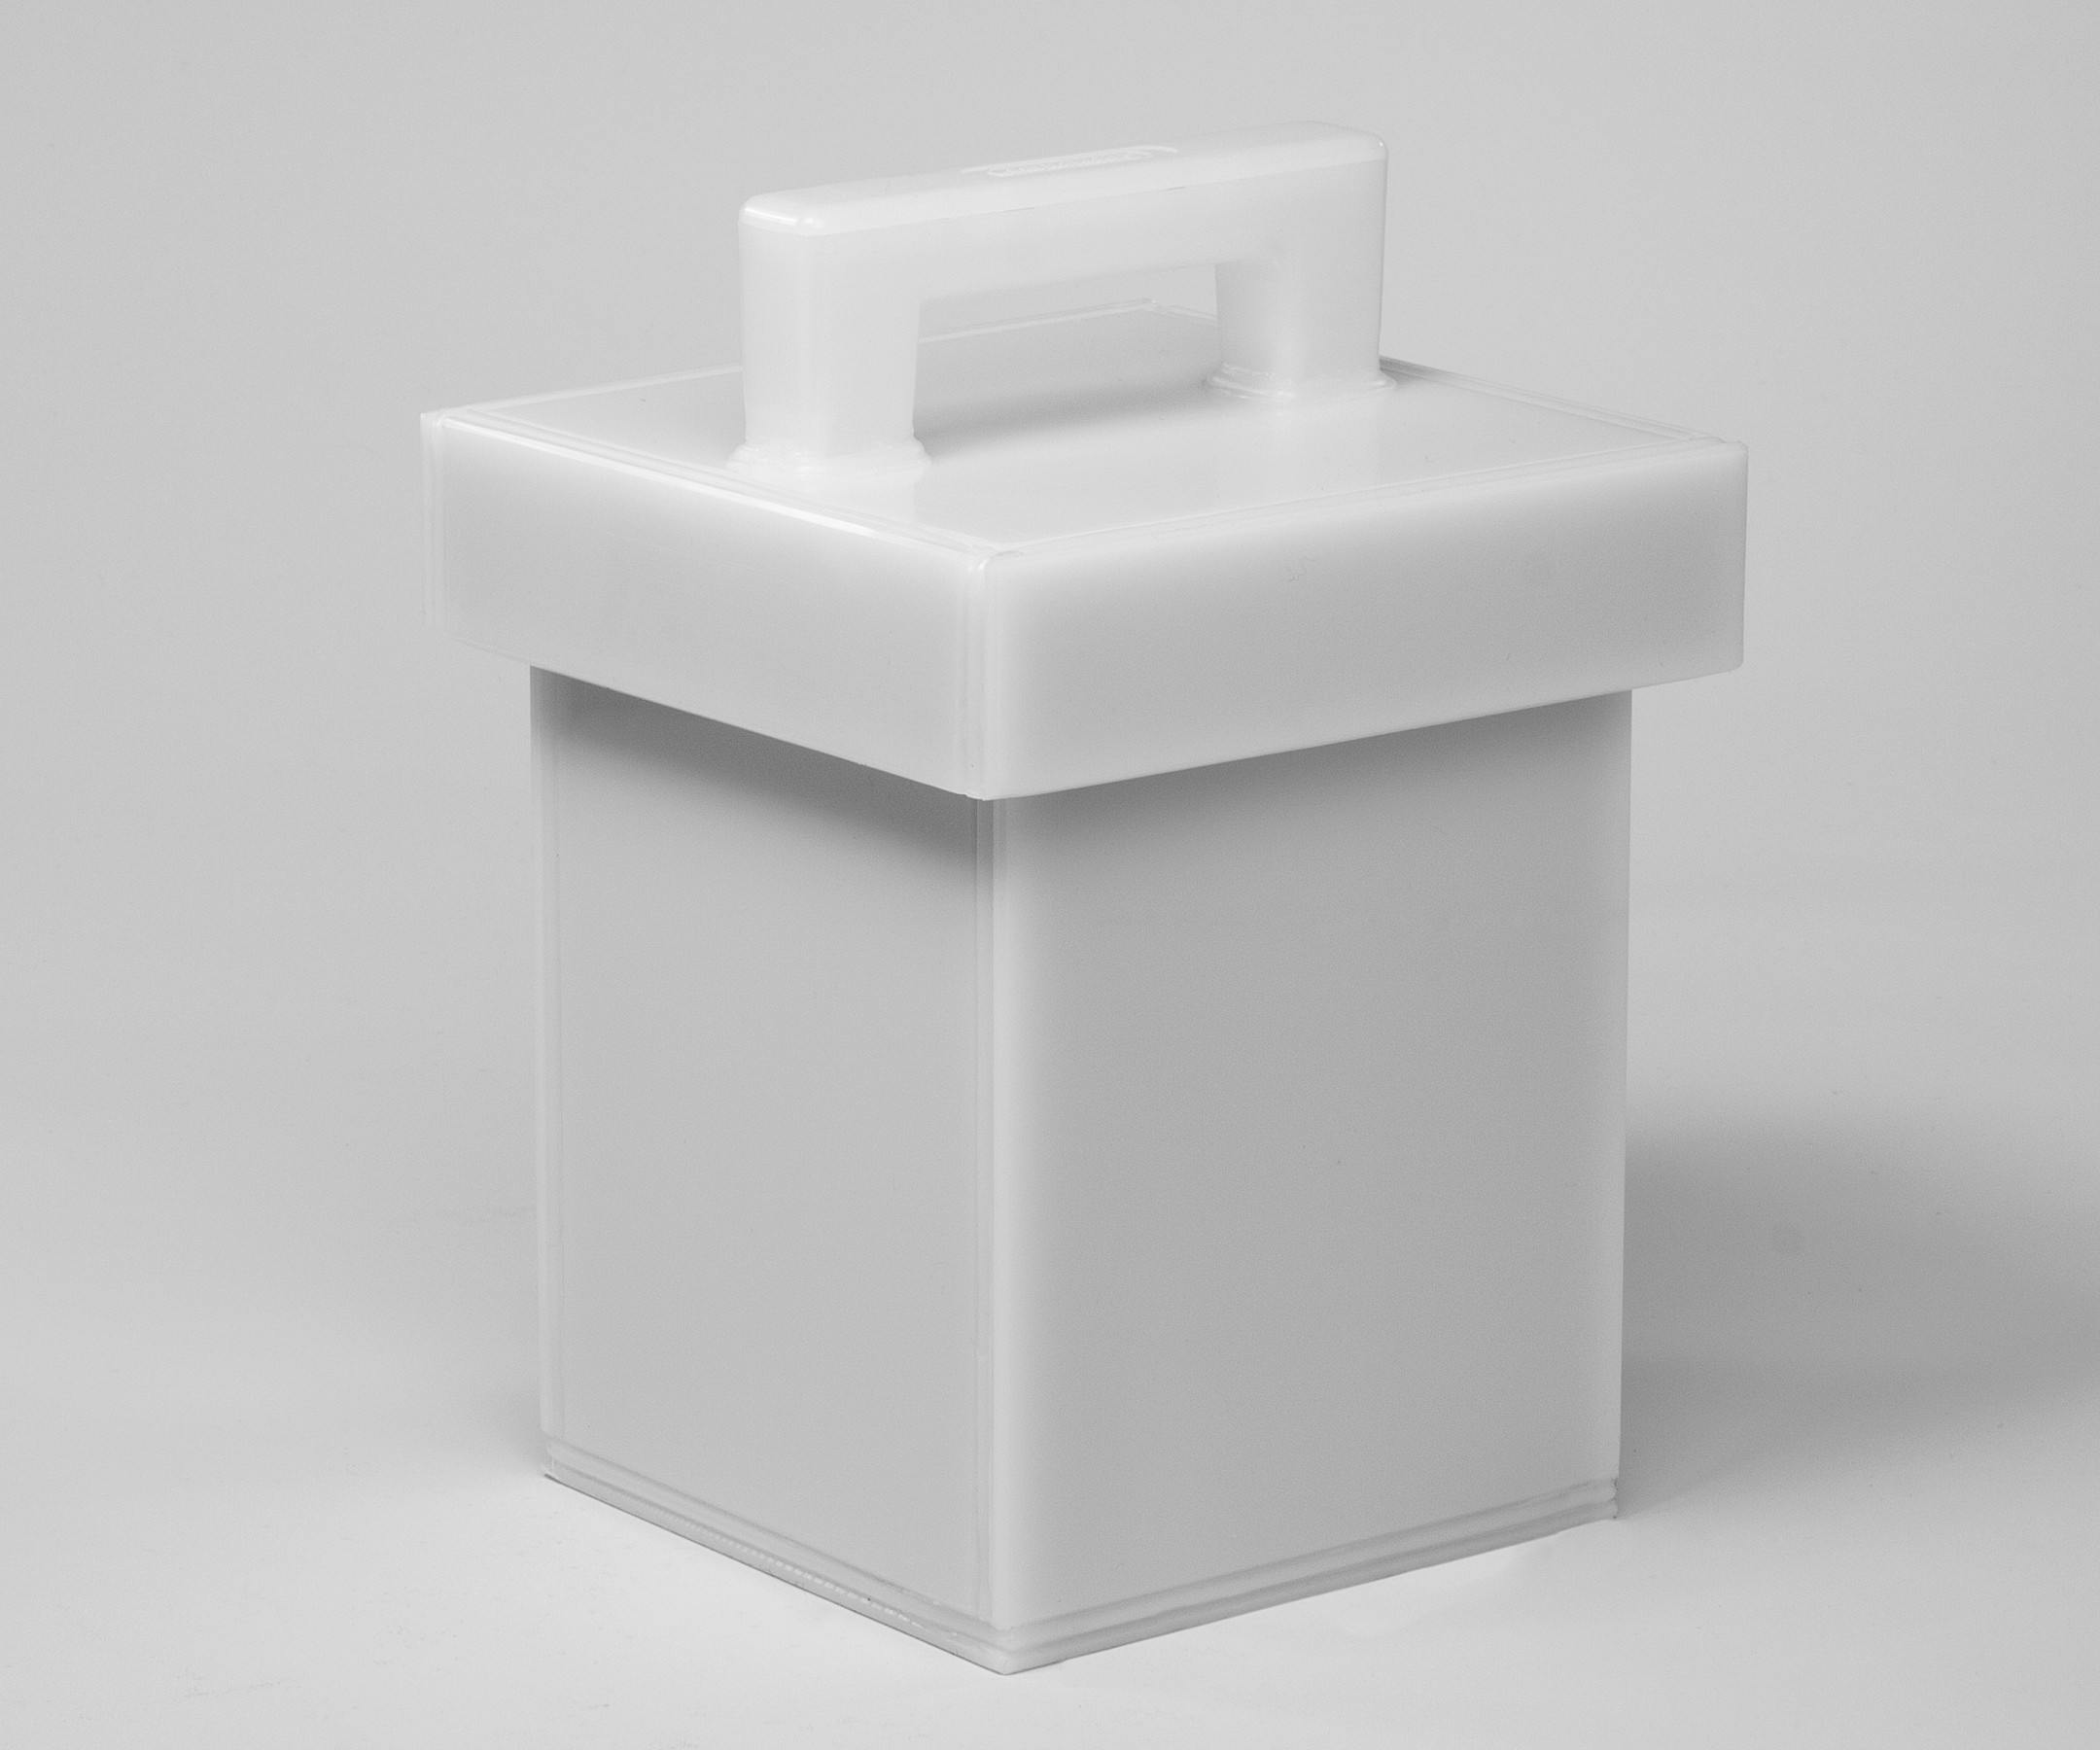 SP Bel-Art Lead Lined Polyethylene Storage Box; 15L x 15W x 20cmH